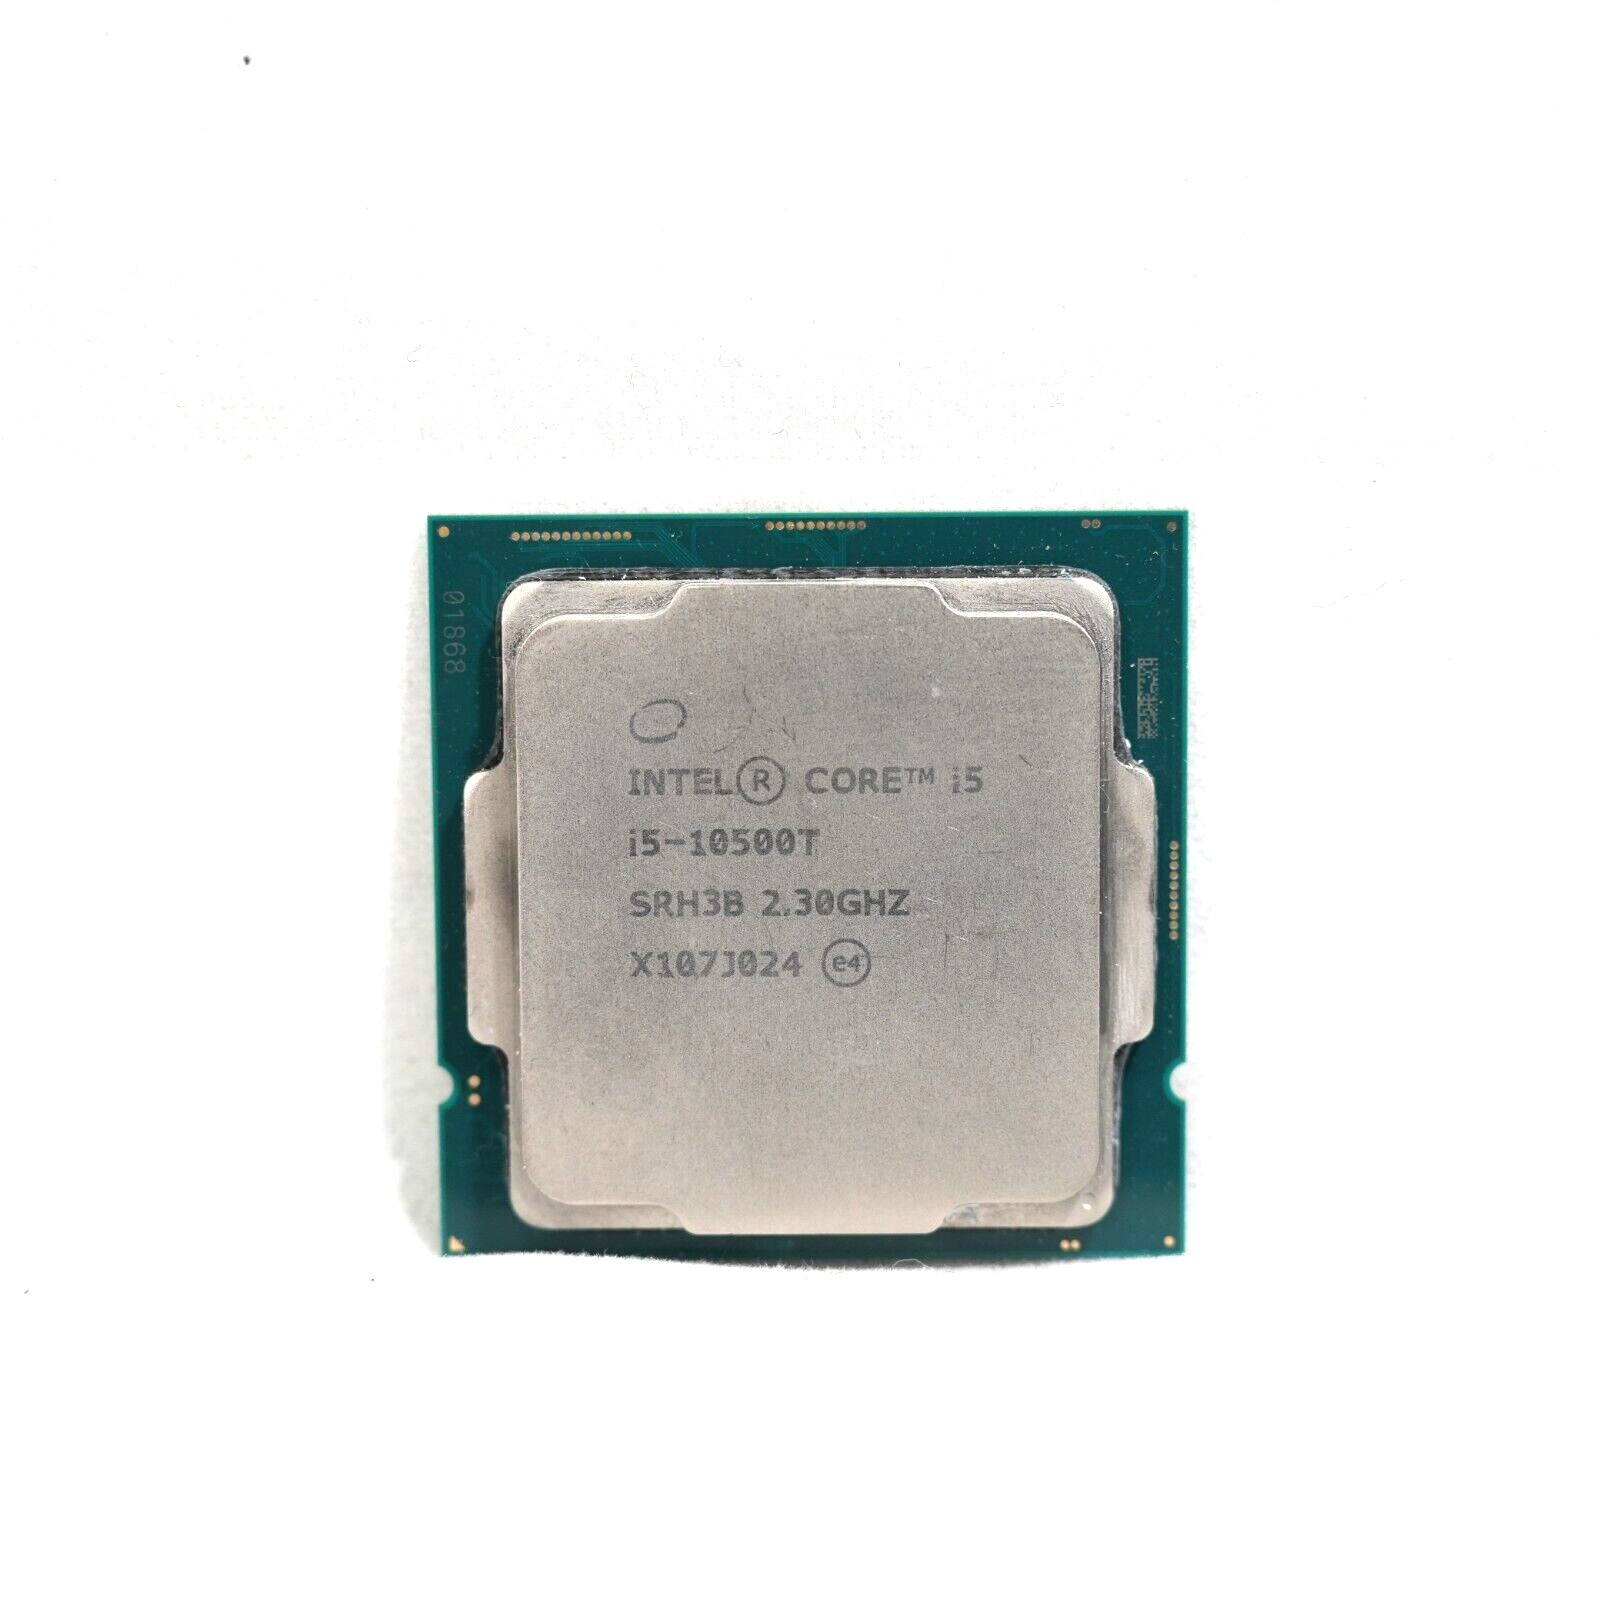 10th Gen Intel Core i5-10500T CPU 2.3GHz (Turbo 3.8GHz) 6-Core 12M LGA1200 SRH3B